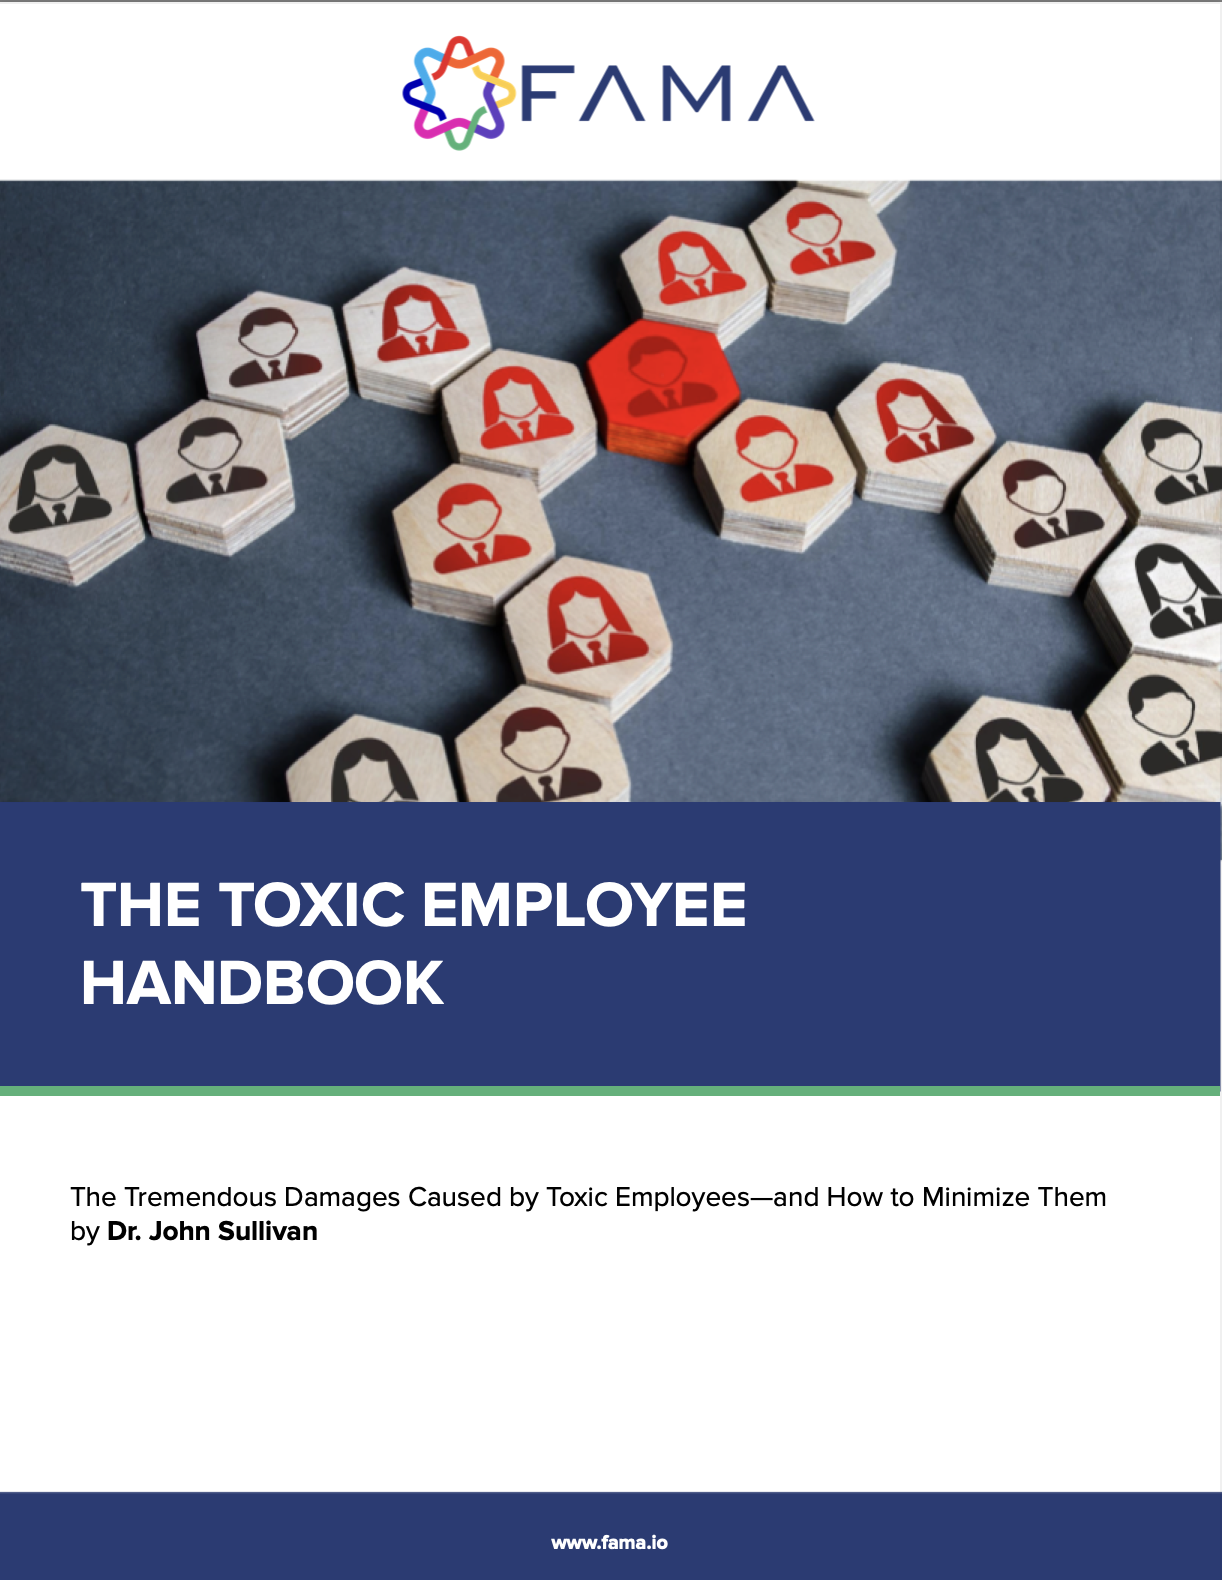 Toxic Employee Handbook cover